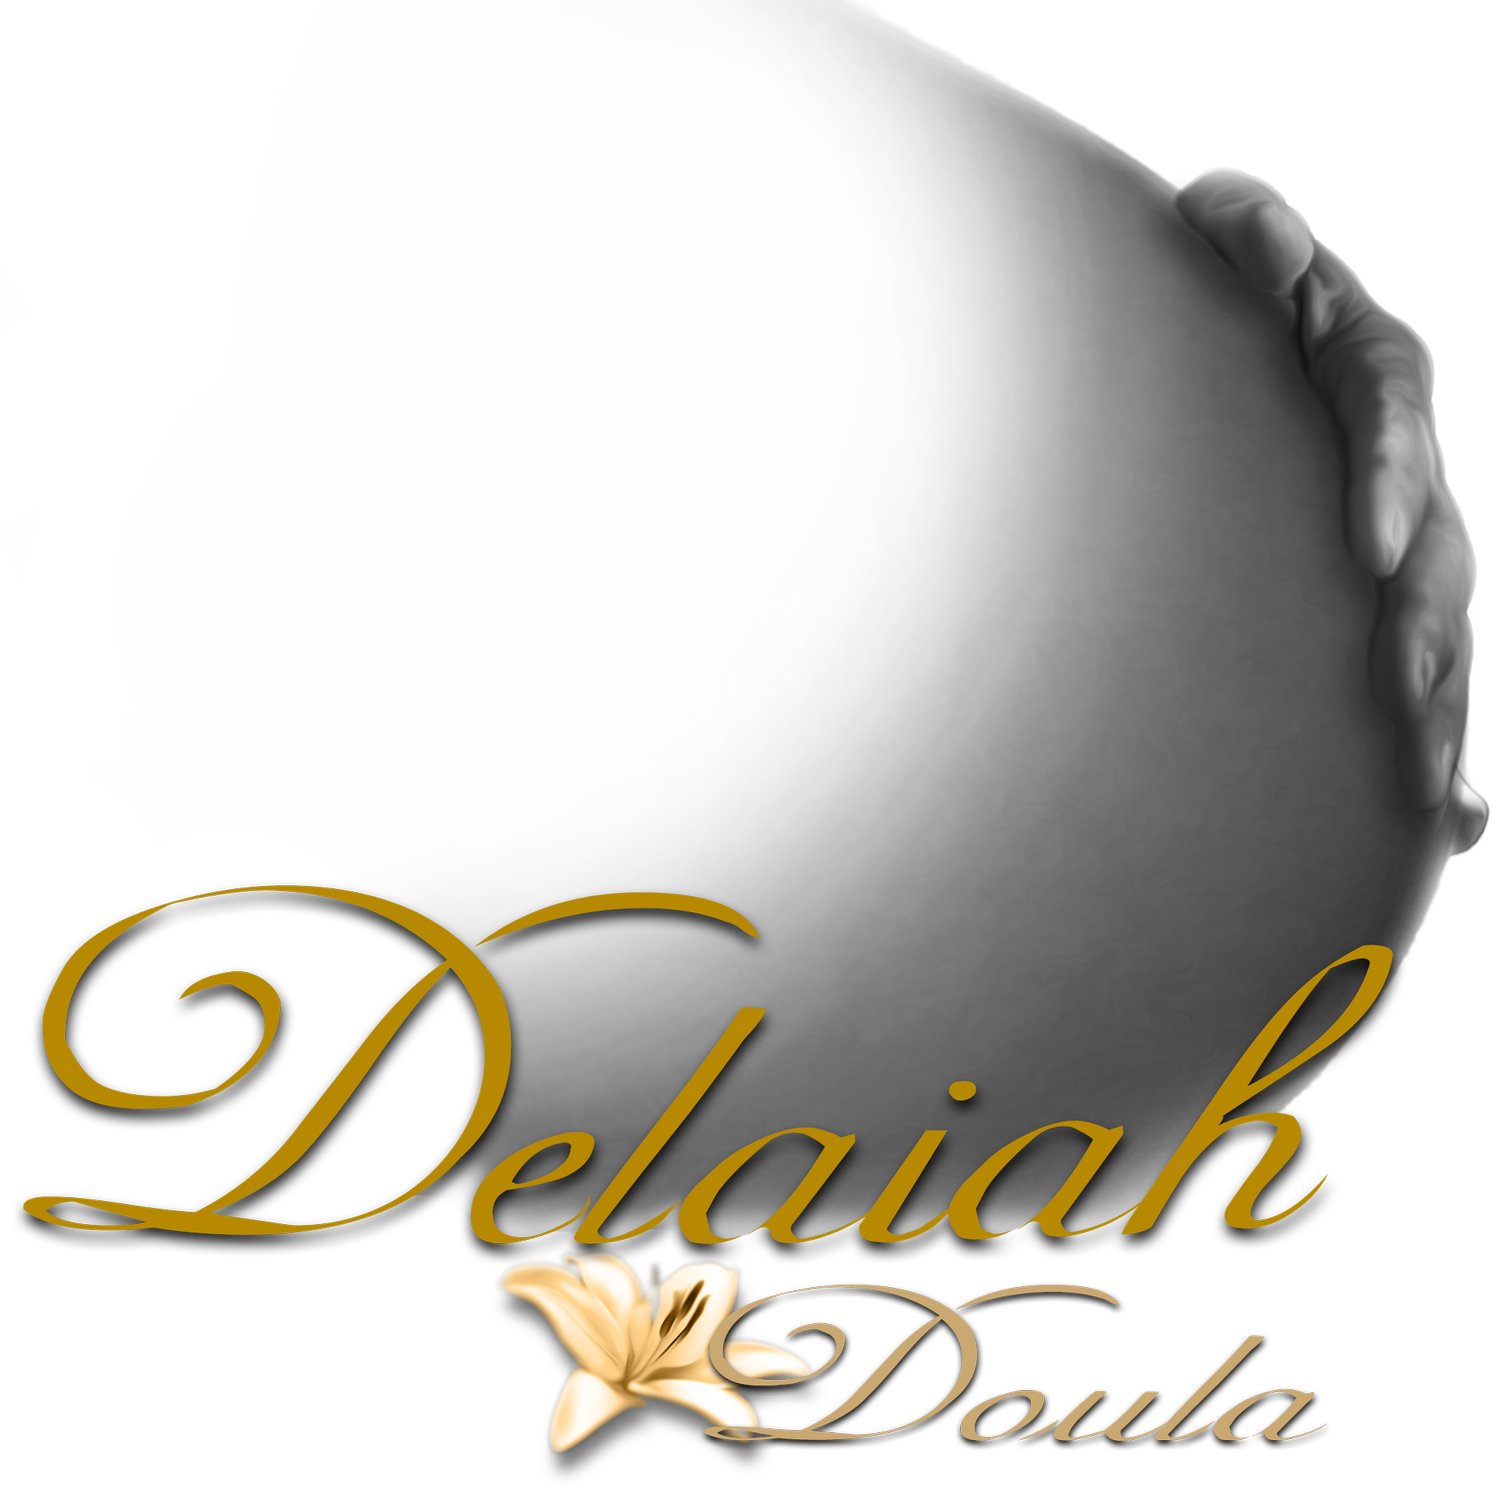 Delaiah Doula Consulting Ltd Co.